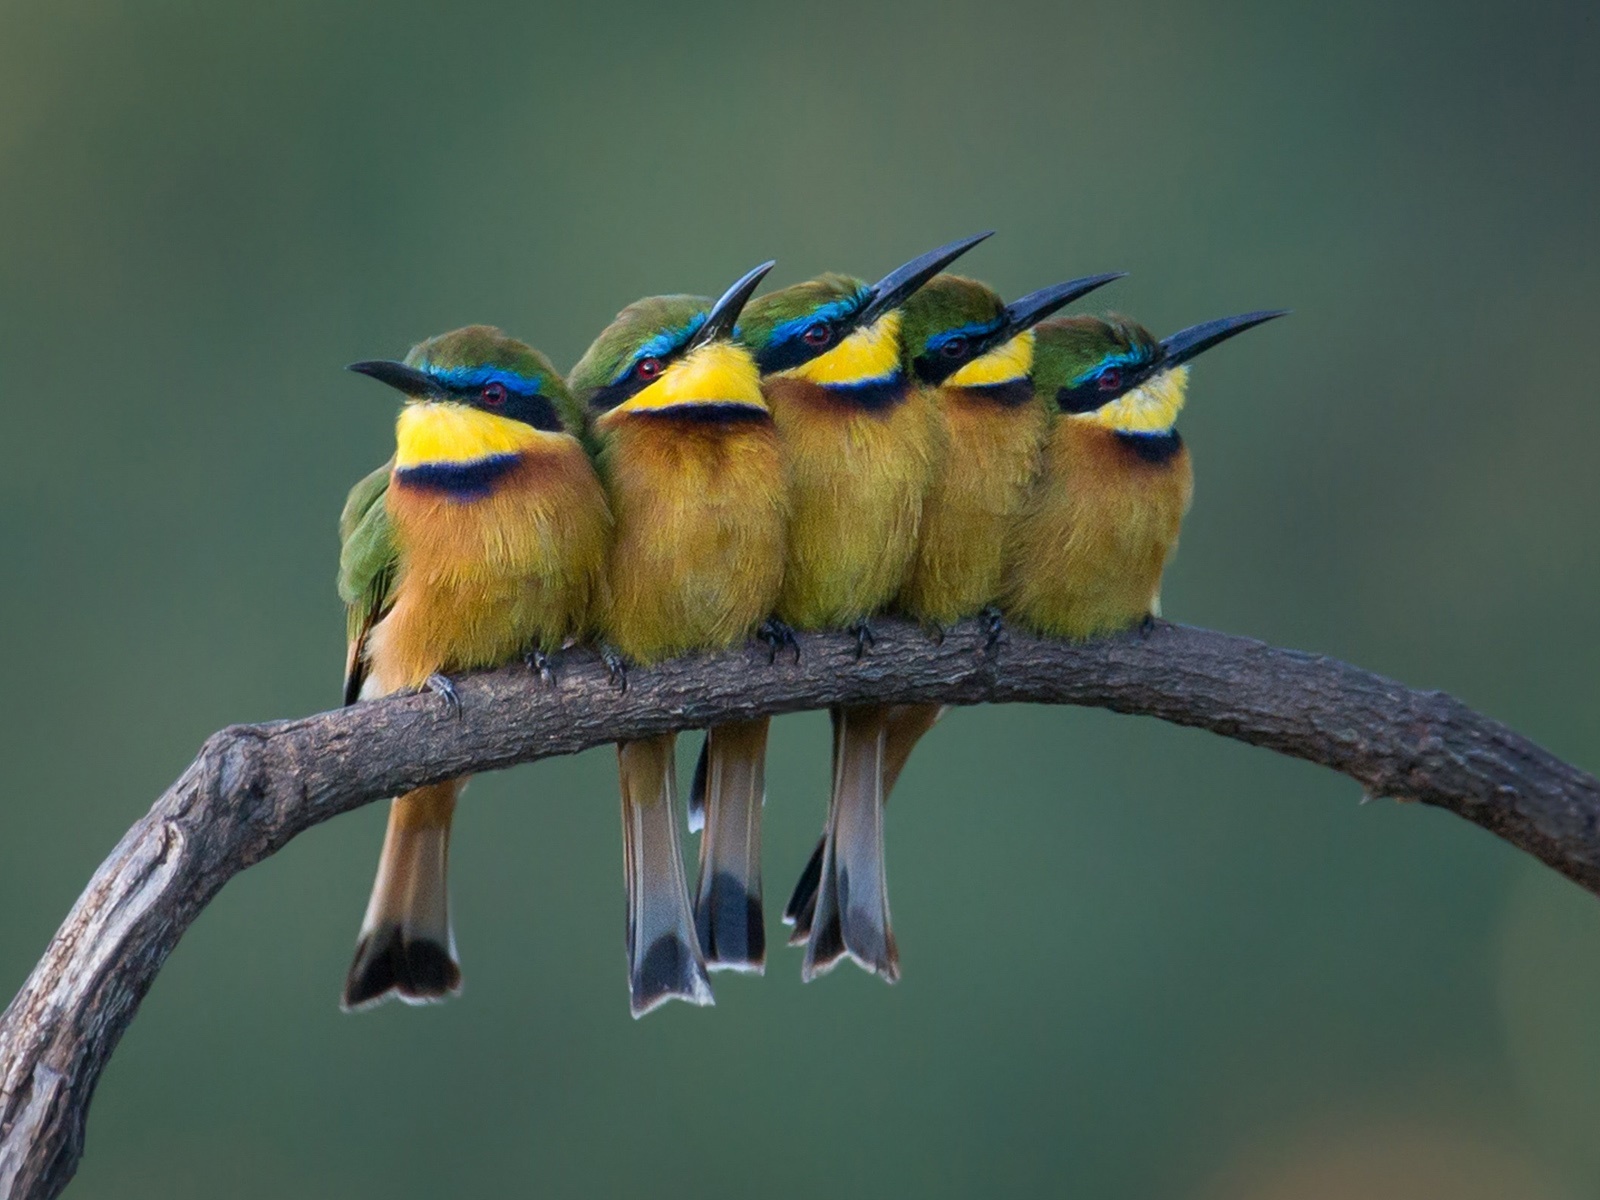 Five Cute Birds Standing On The Tree Branch Desktop Wallpaper